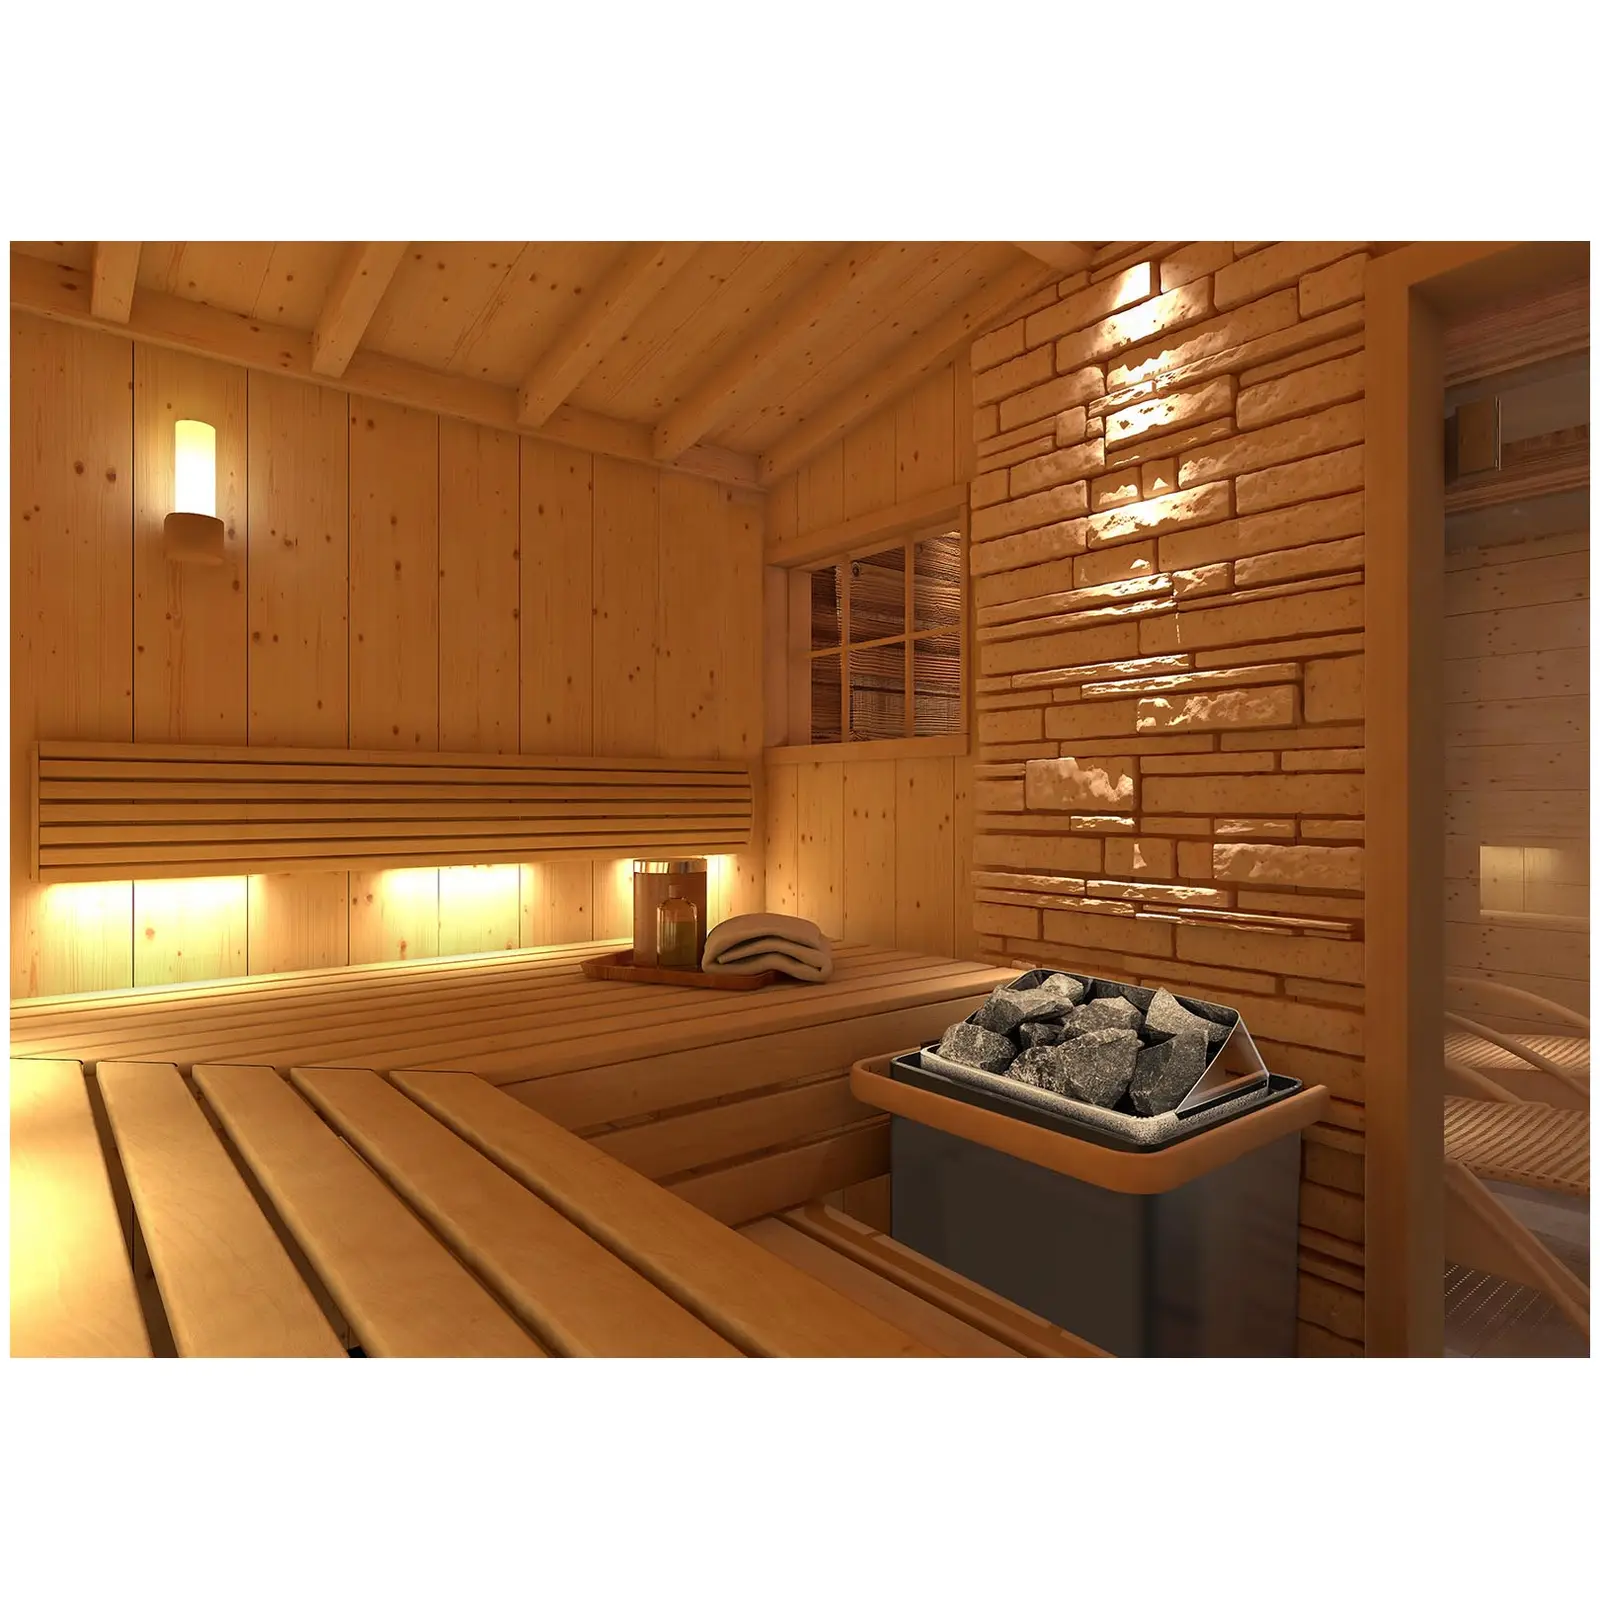 Aquecedor para sauna - elétrico - 6 kW